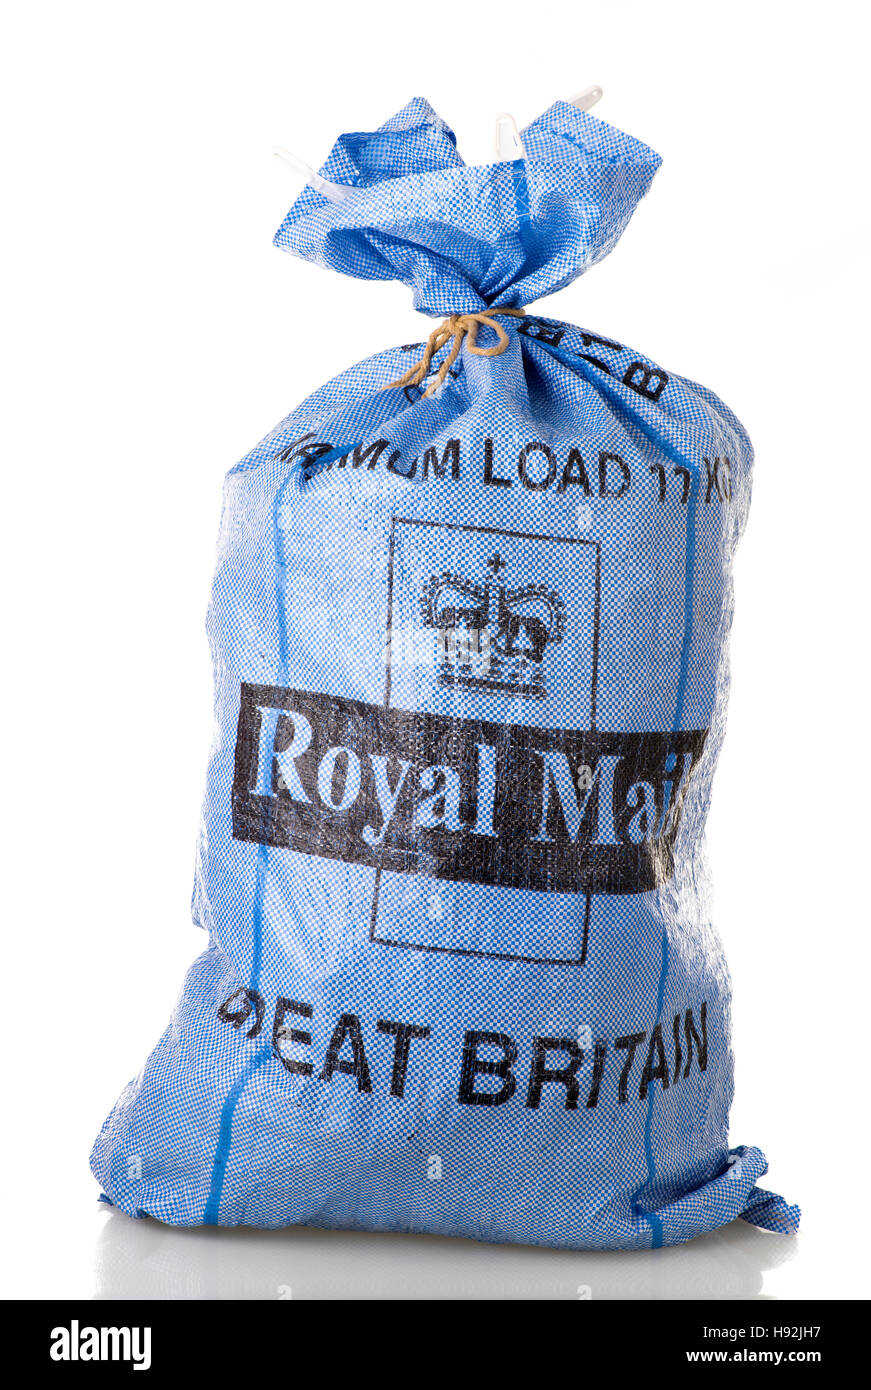 Royal mail sack - Blue Stock Photo